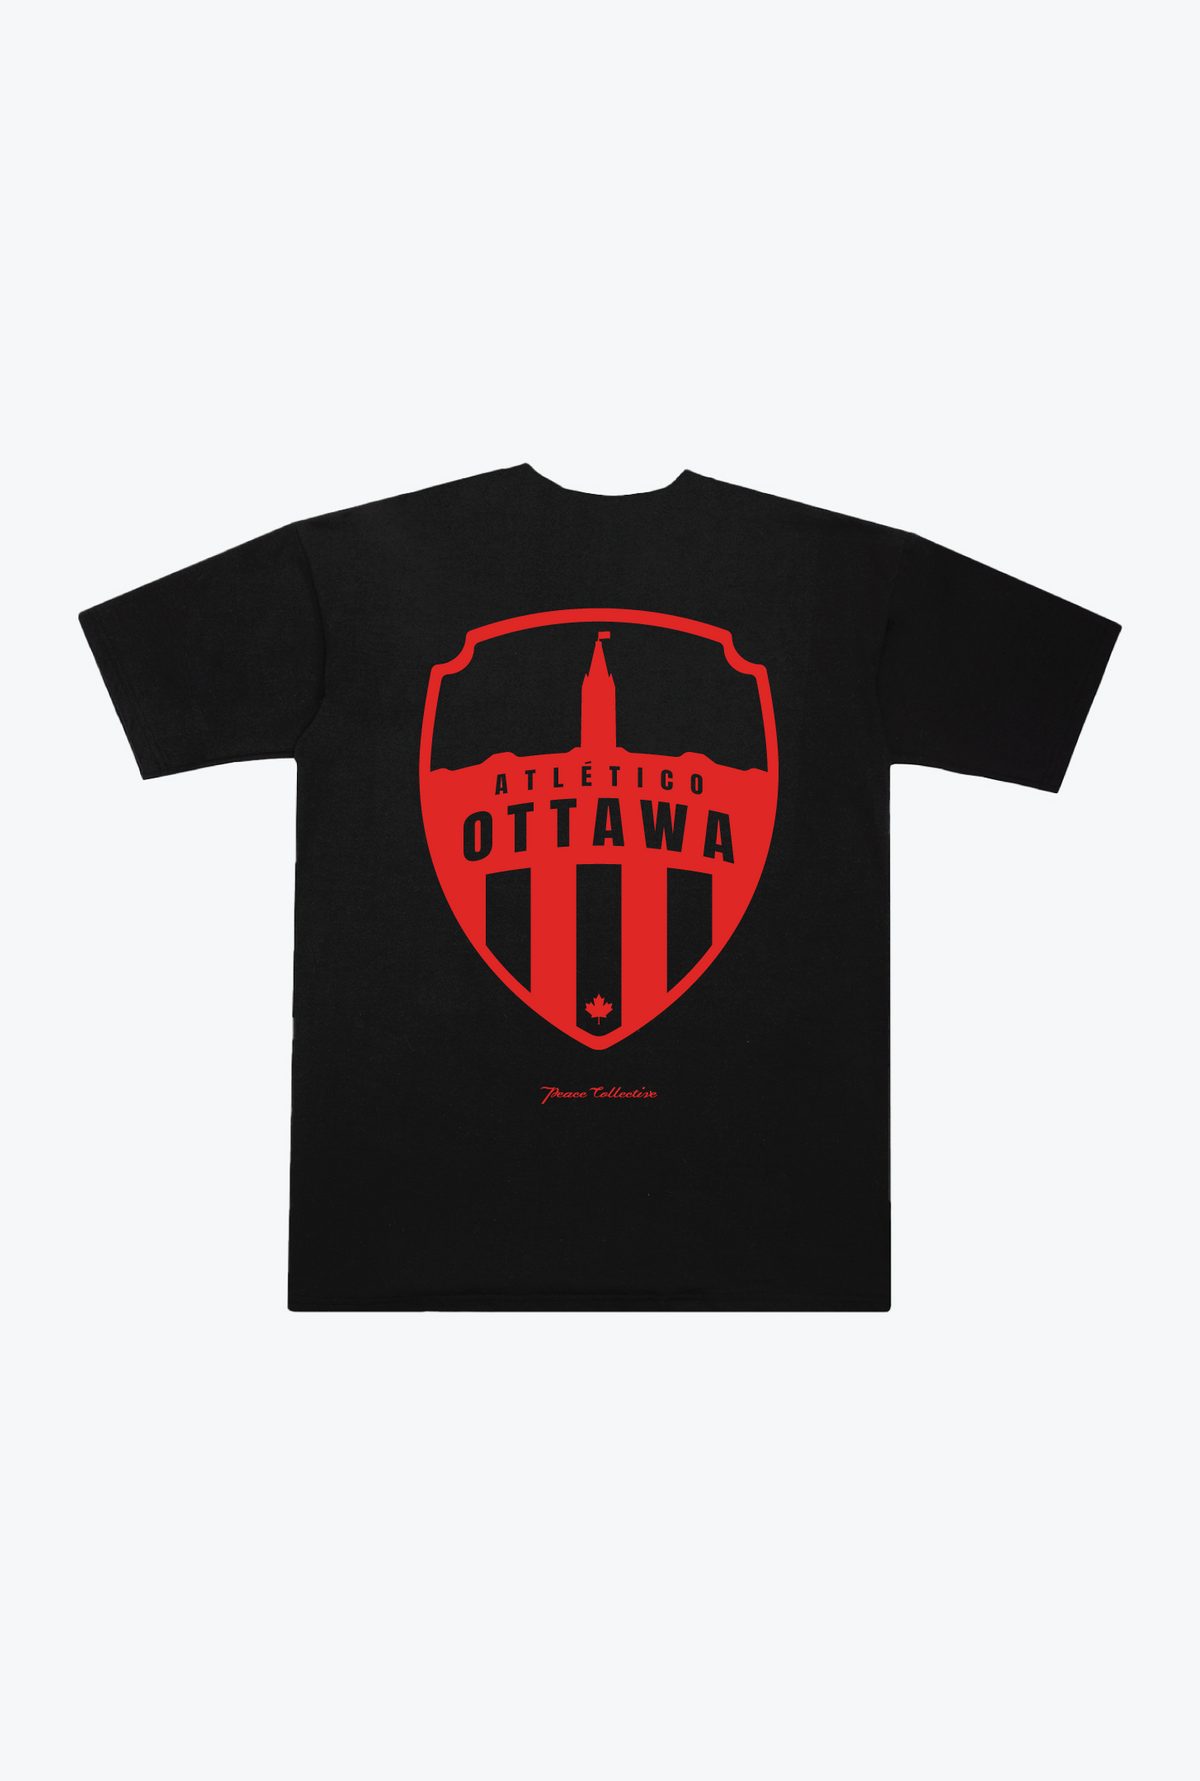 Atletico Ottawa Heavyweight T-Shirt - Black